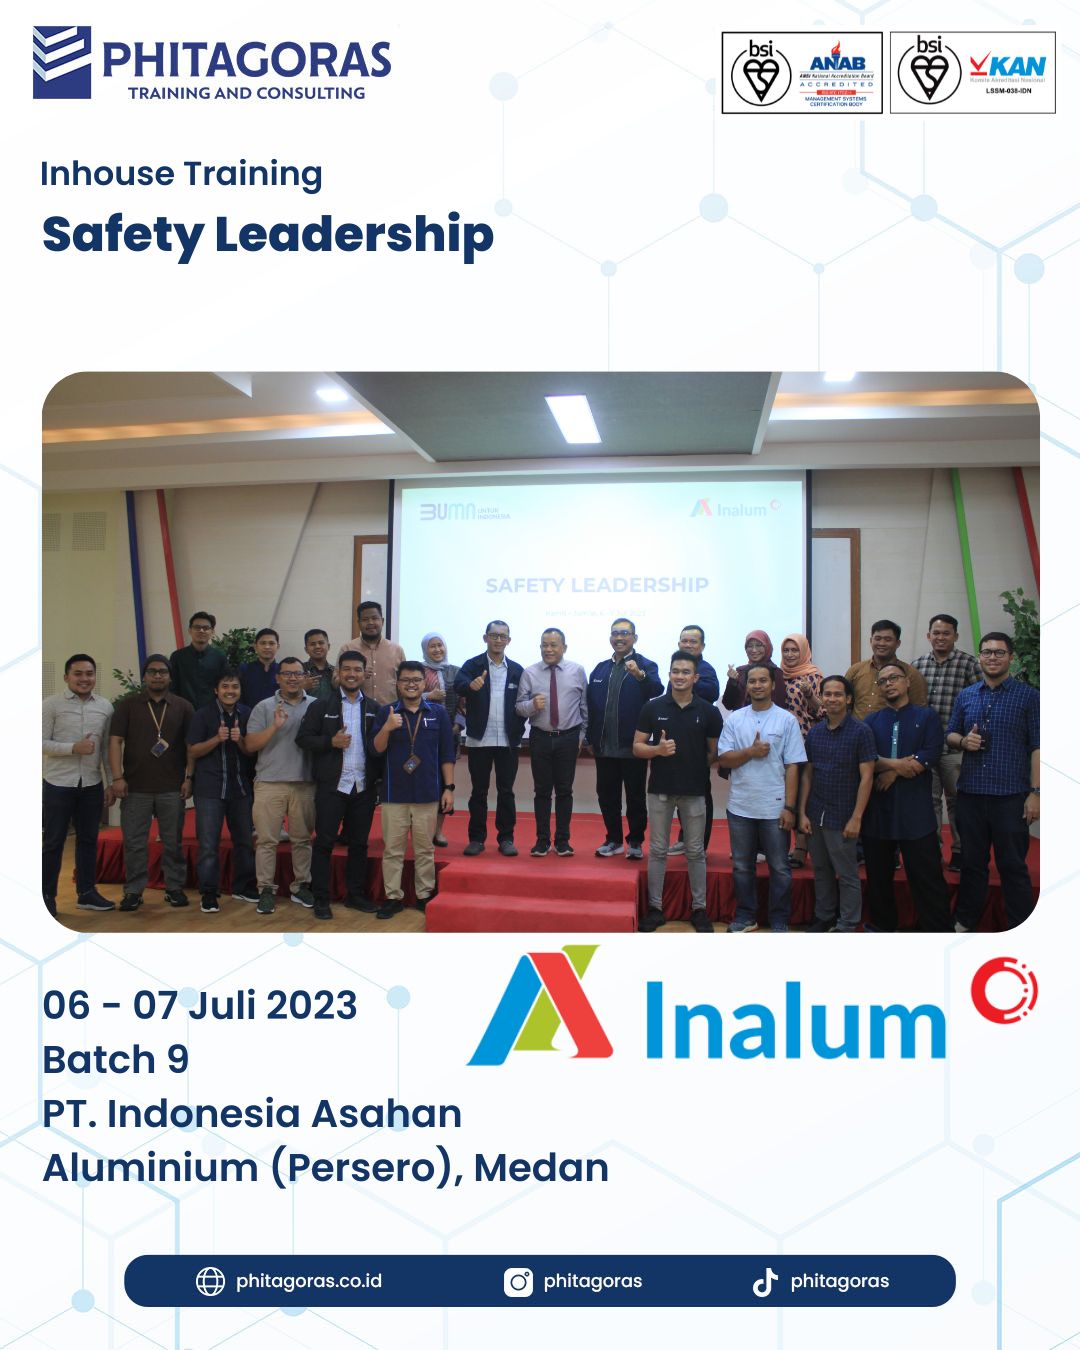 Inhouse Training Safety Leadership – PT. Indonesia Asahan Aluminium (Persero) Batch 9